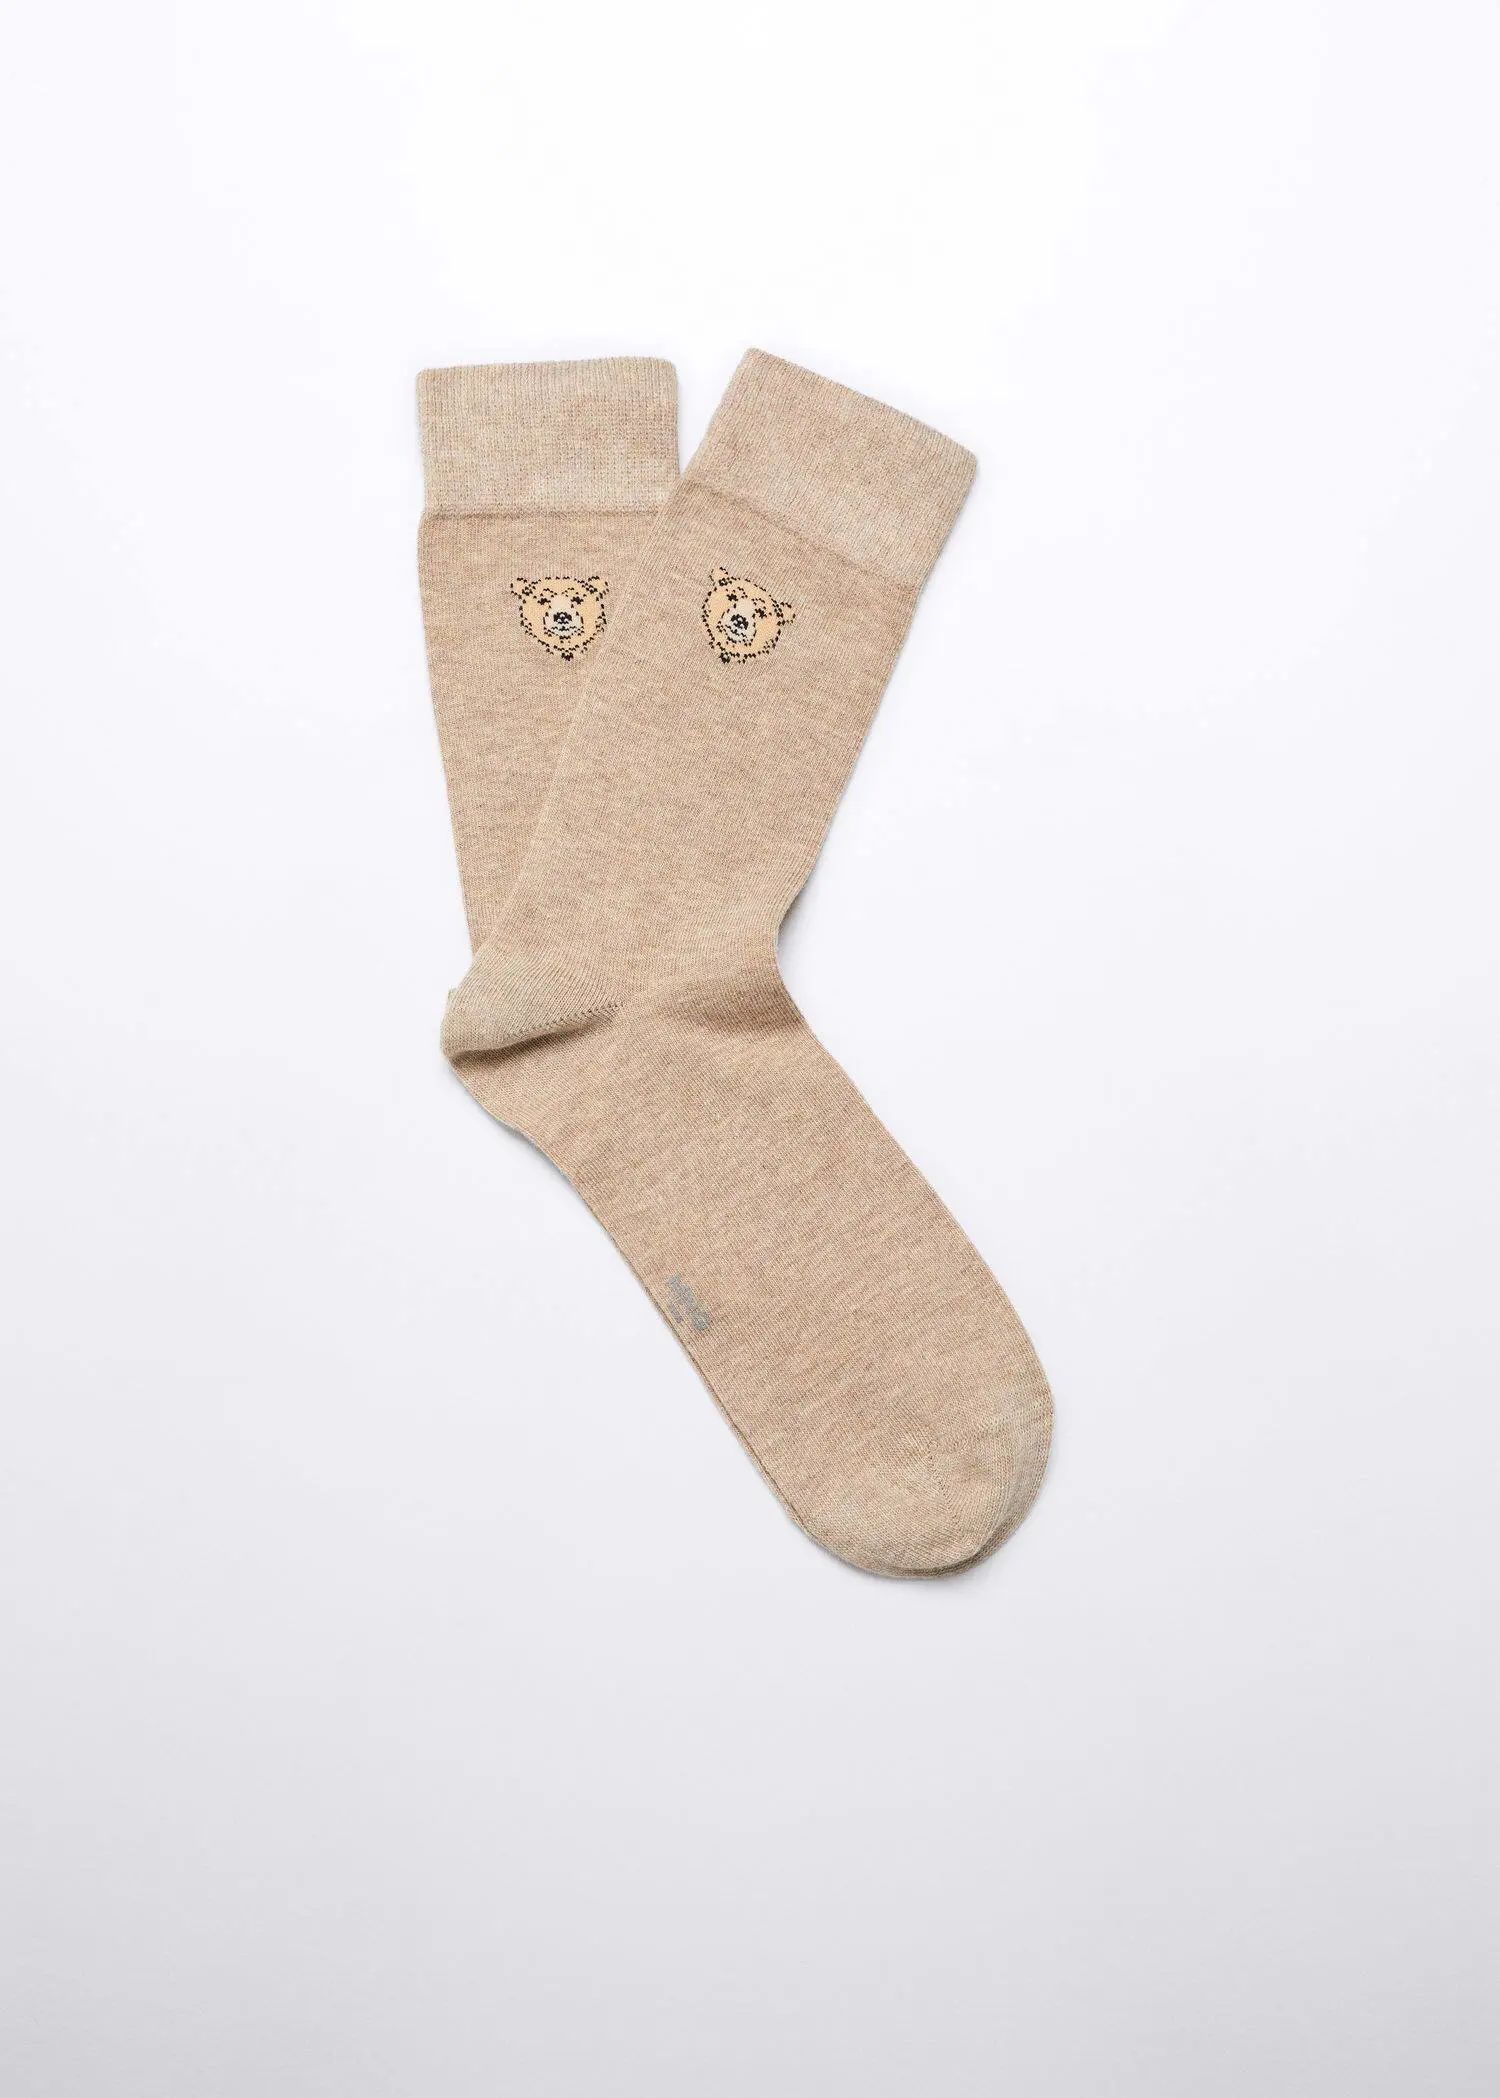 Mango Bear-design cotton socks. a pair of beige socks with bears on them. 